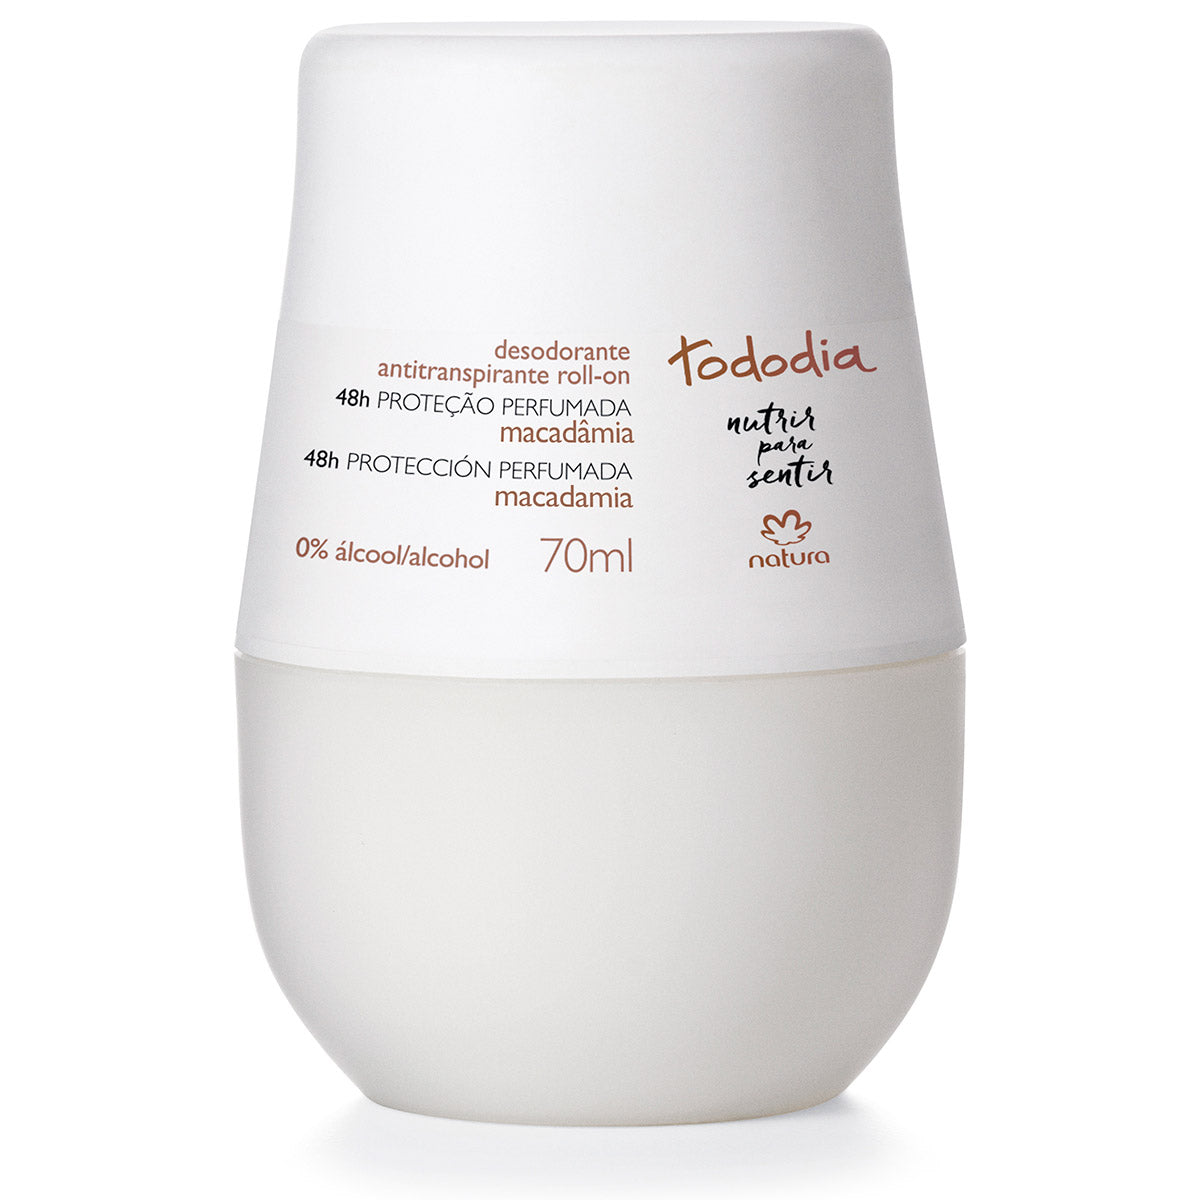 Desodorante Antitranspirante Roll-on Macadâmia Tododia - 70ml – IDA Beauty  UK